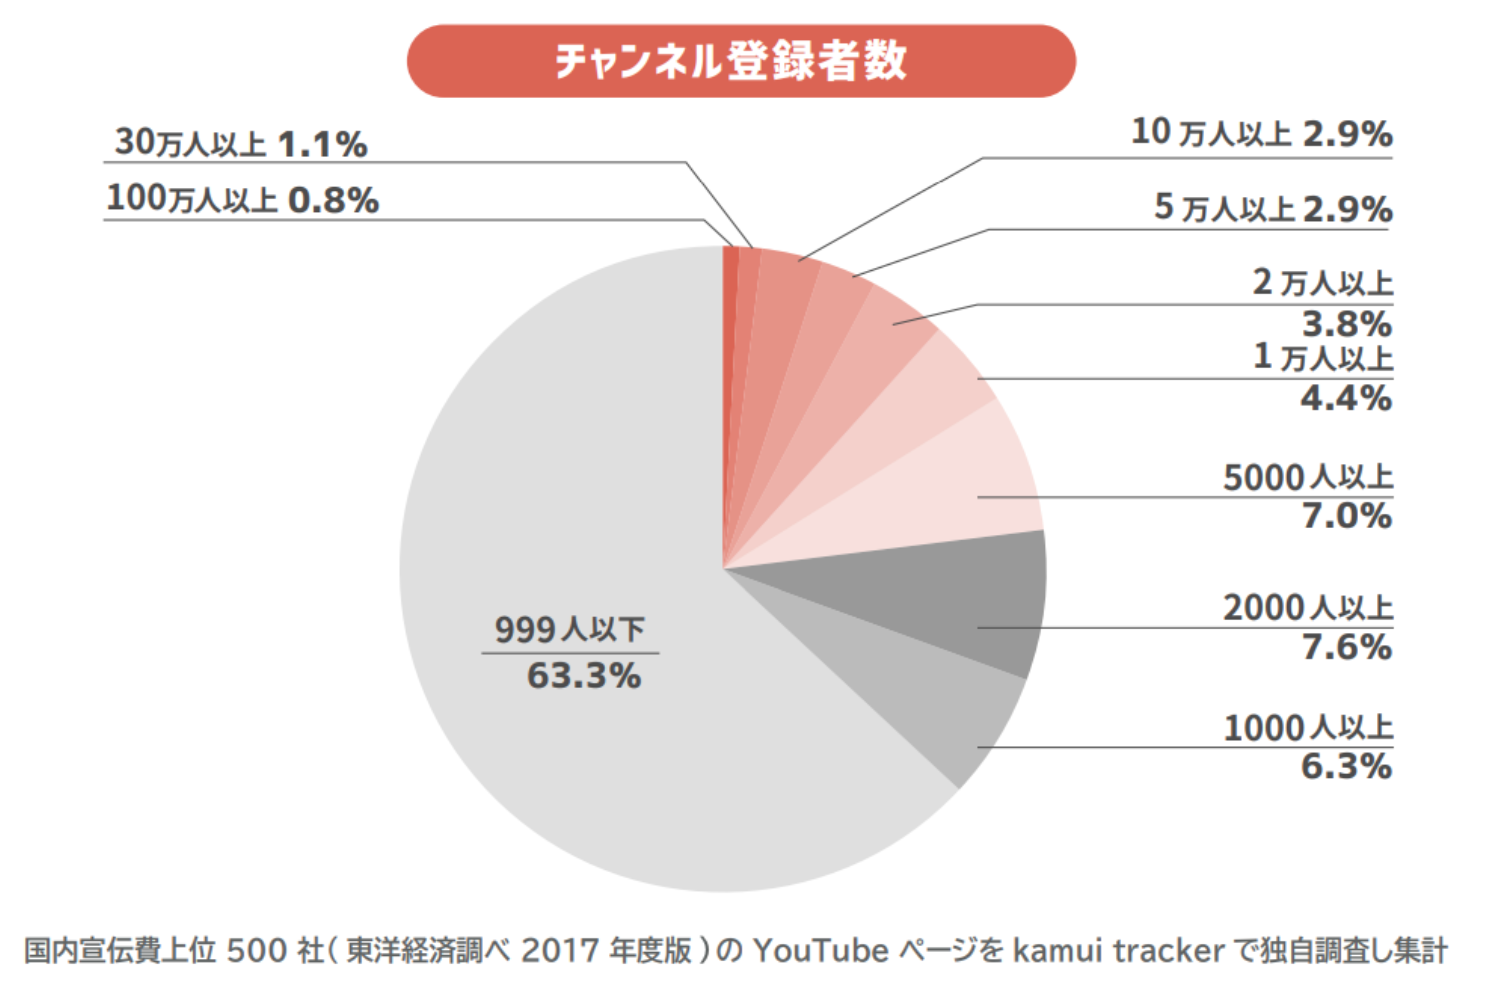 YouTubeチャンネル登録者数のグラフ